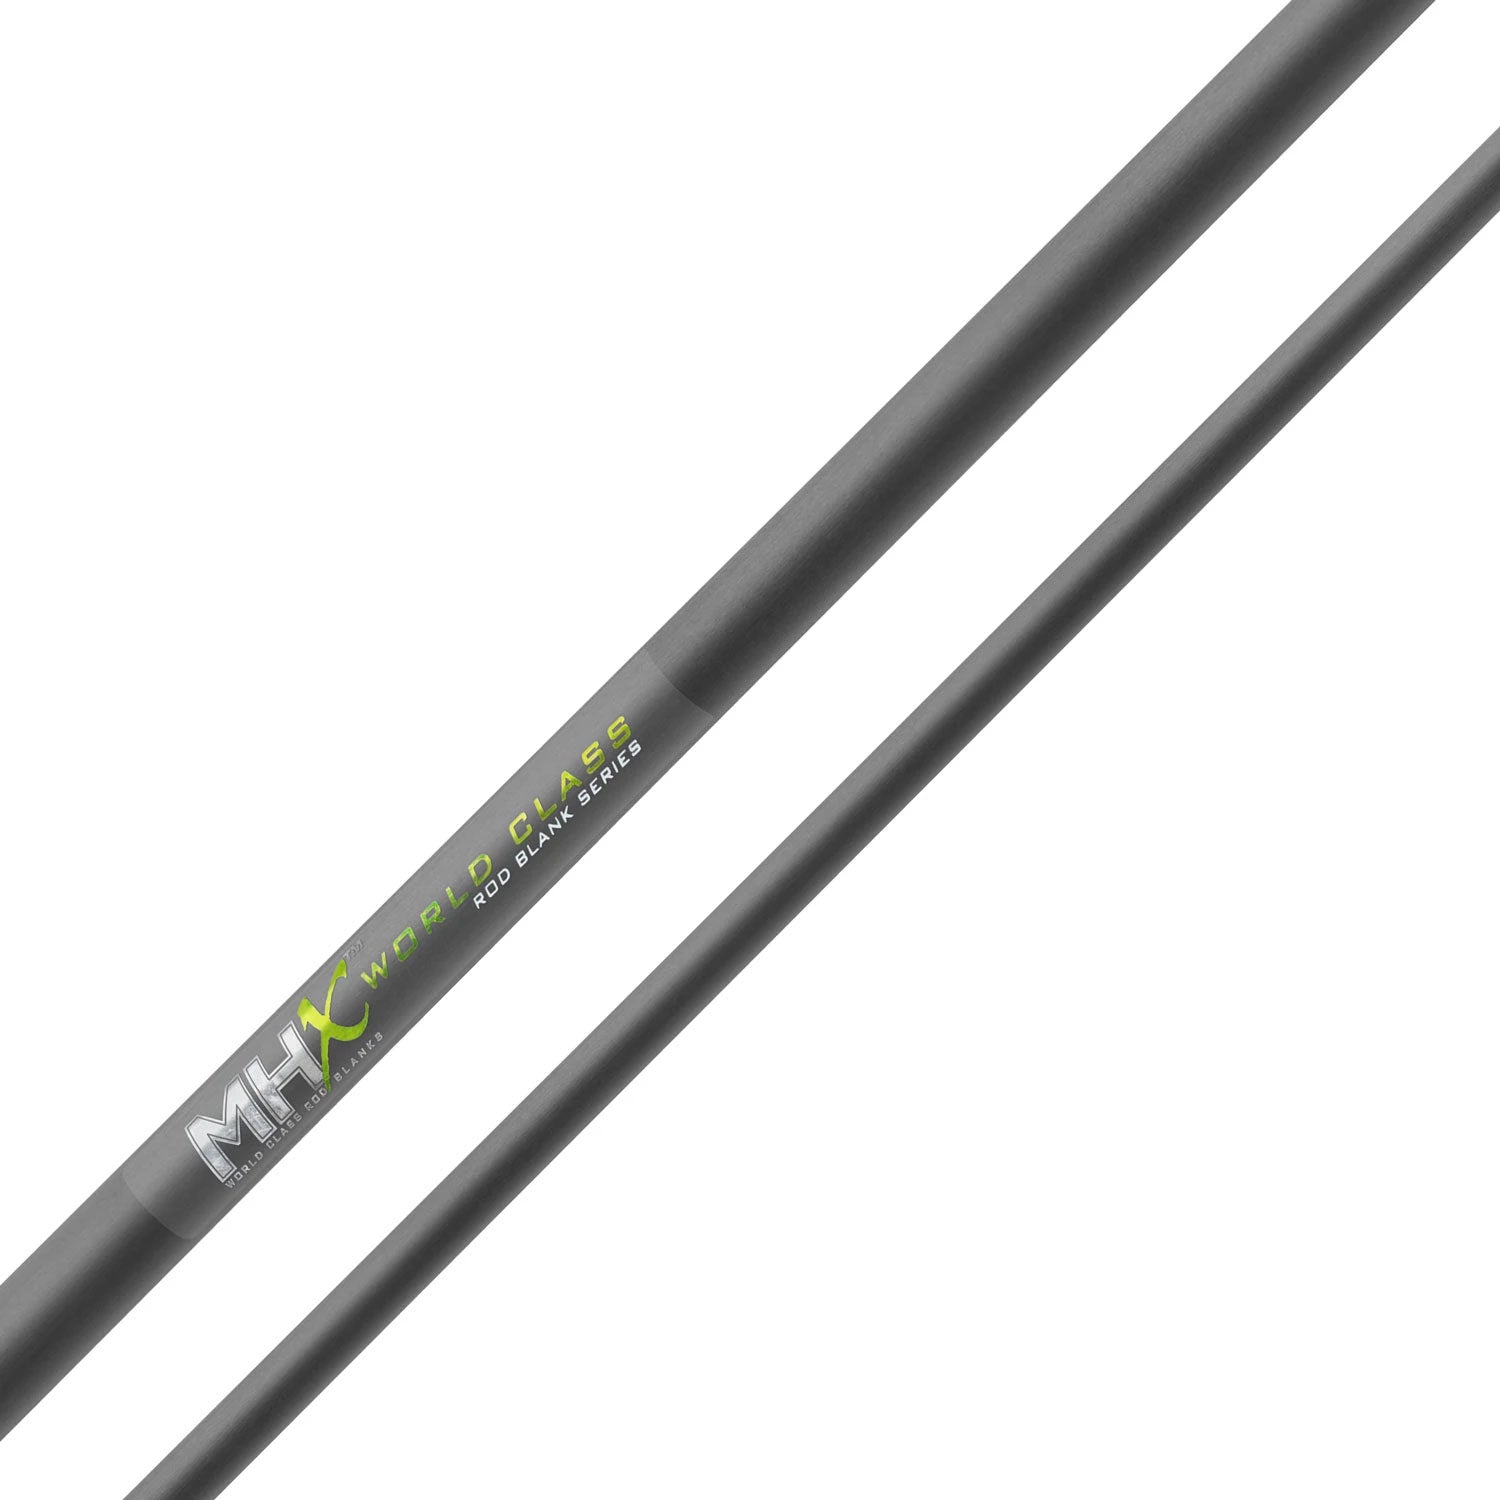 MHX 6'6" Light Spinning Rod Blank - S782-2-MHX